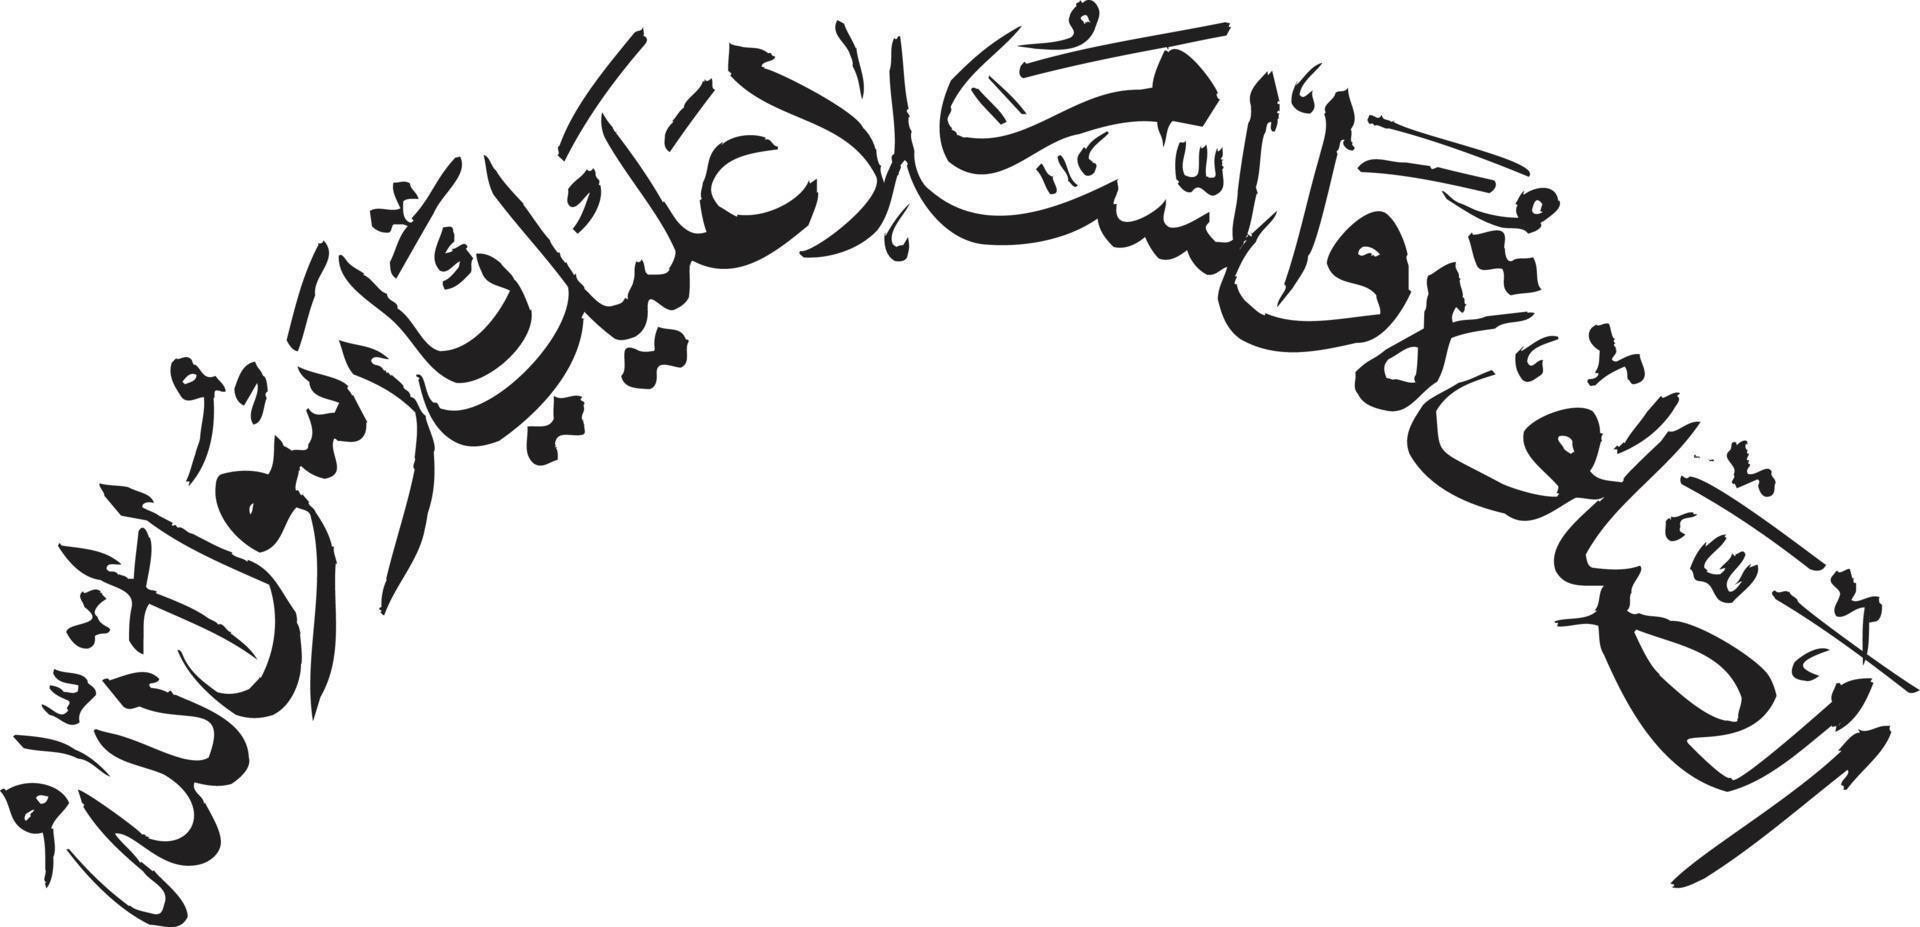 vetor livre de caligrafia urdu islâmica slaam